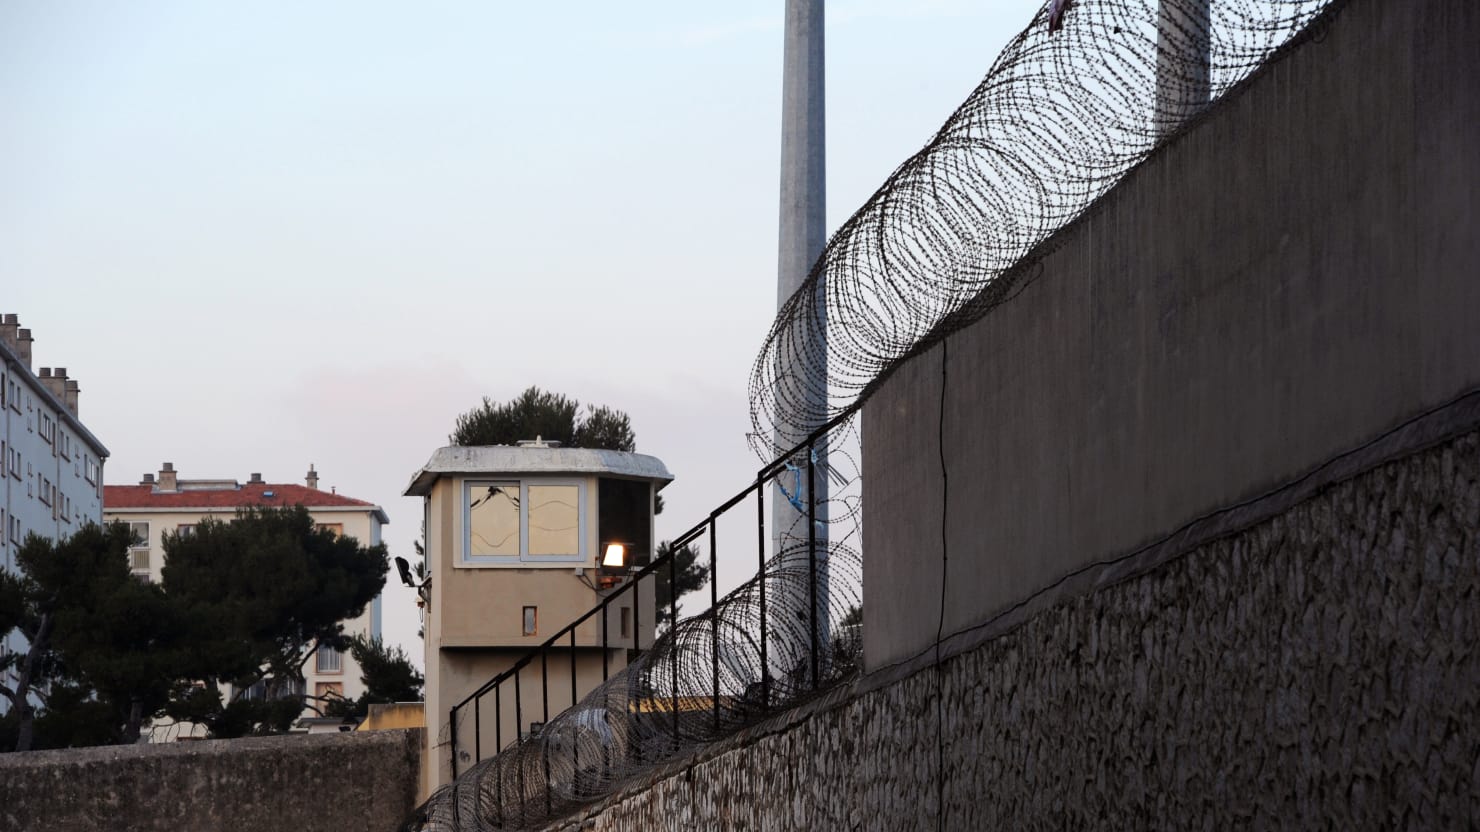 130605 ferranti prisonmexico tease k2urhn - Blog